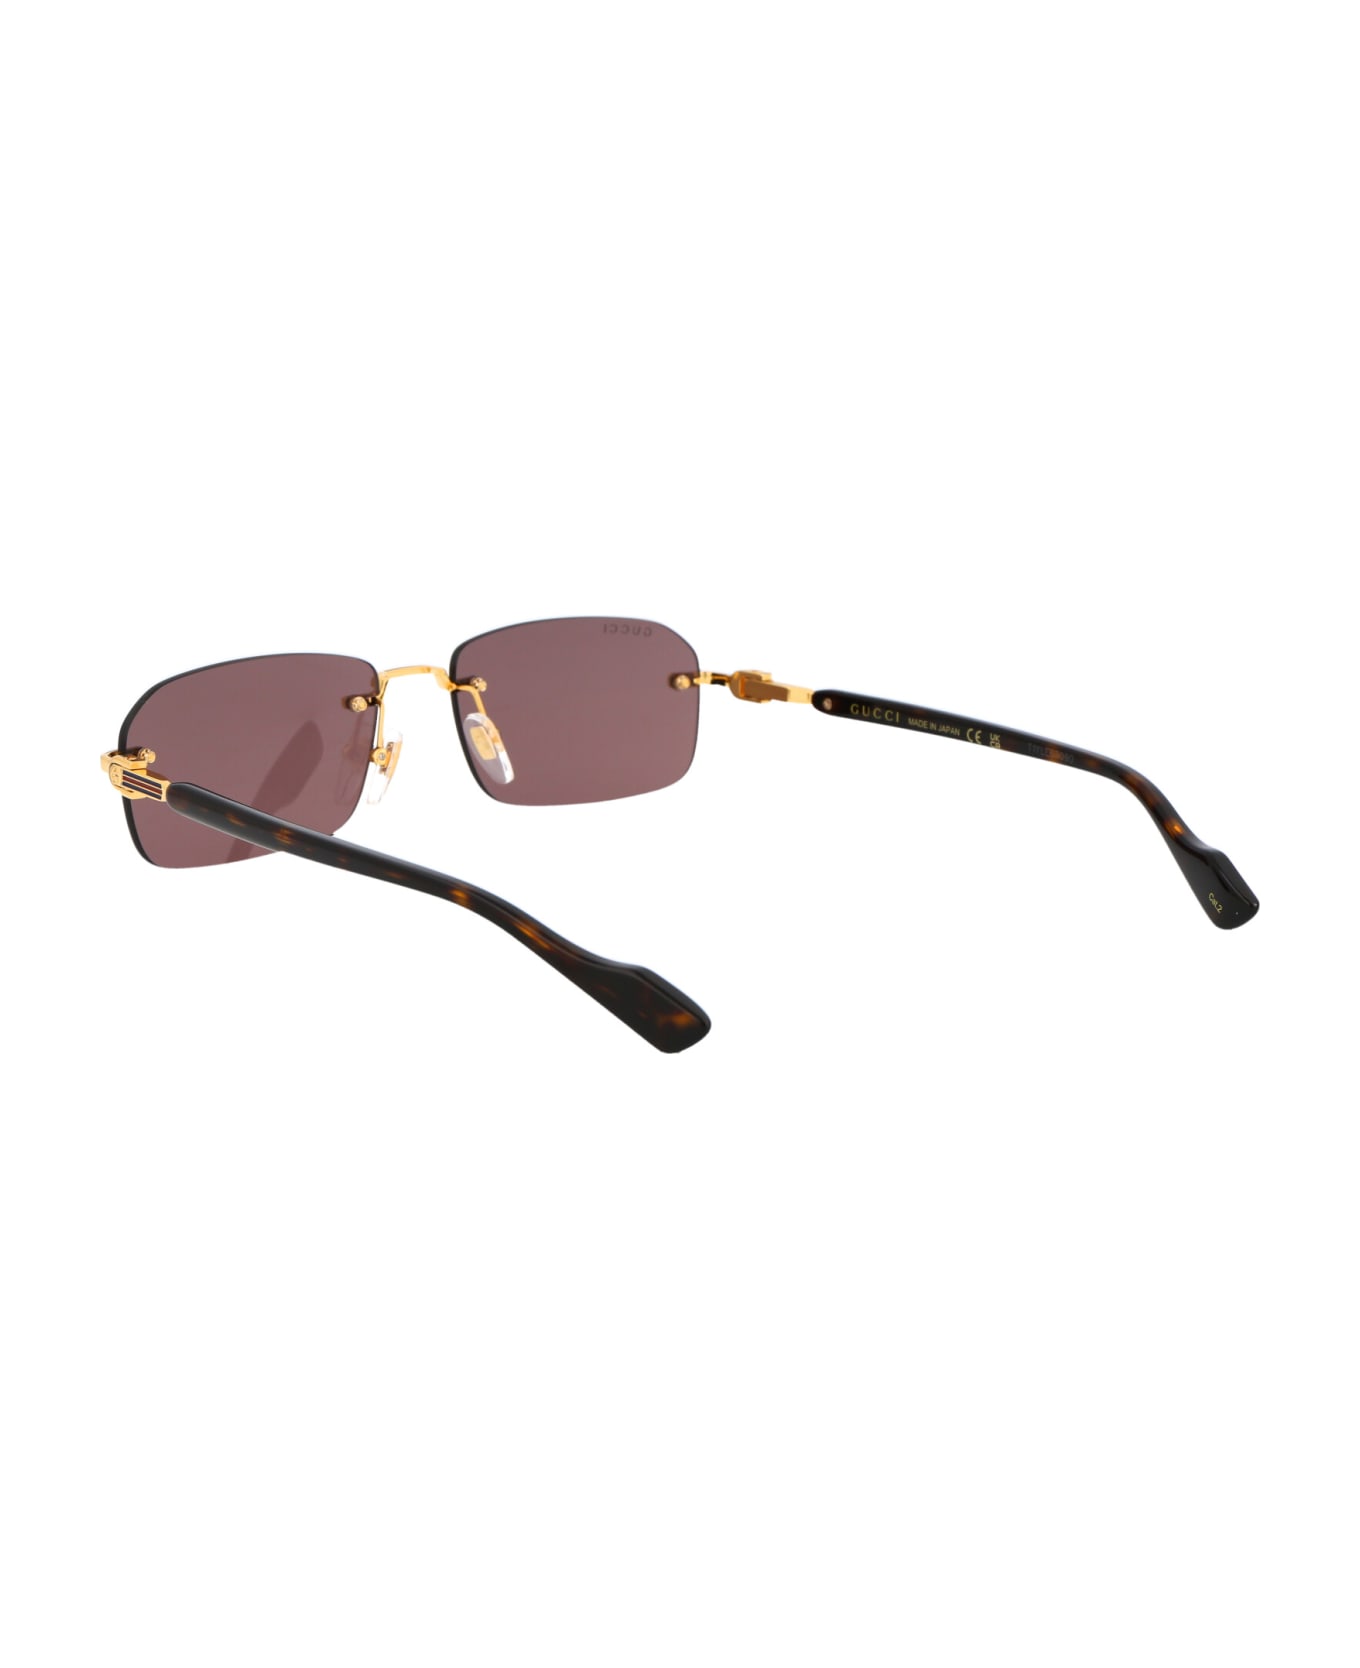 Gucci Eyewear Gg1221s Sunglasses - 002 GOLD HAVANA BROWN サングラス